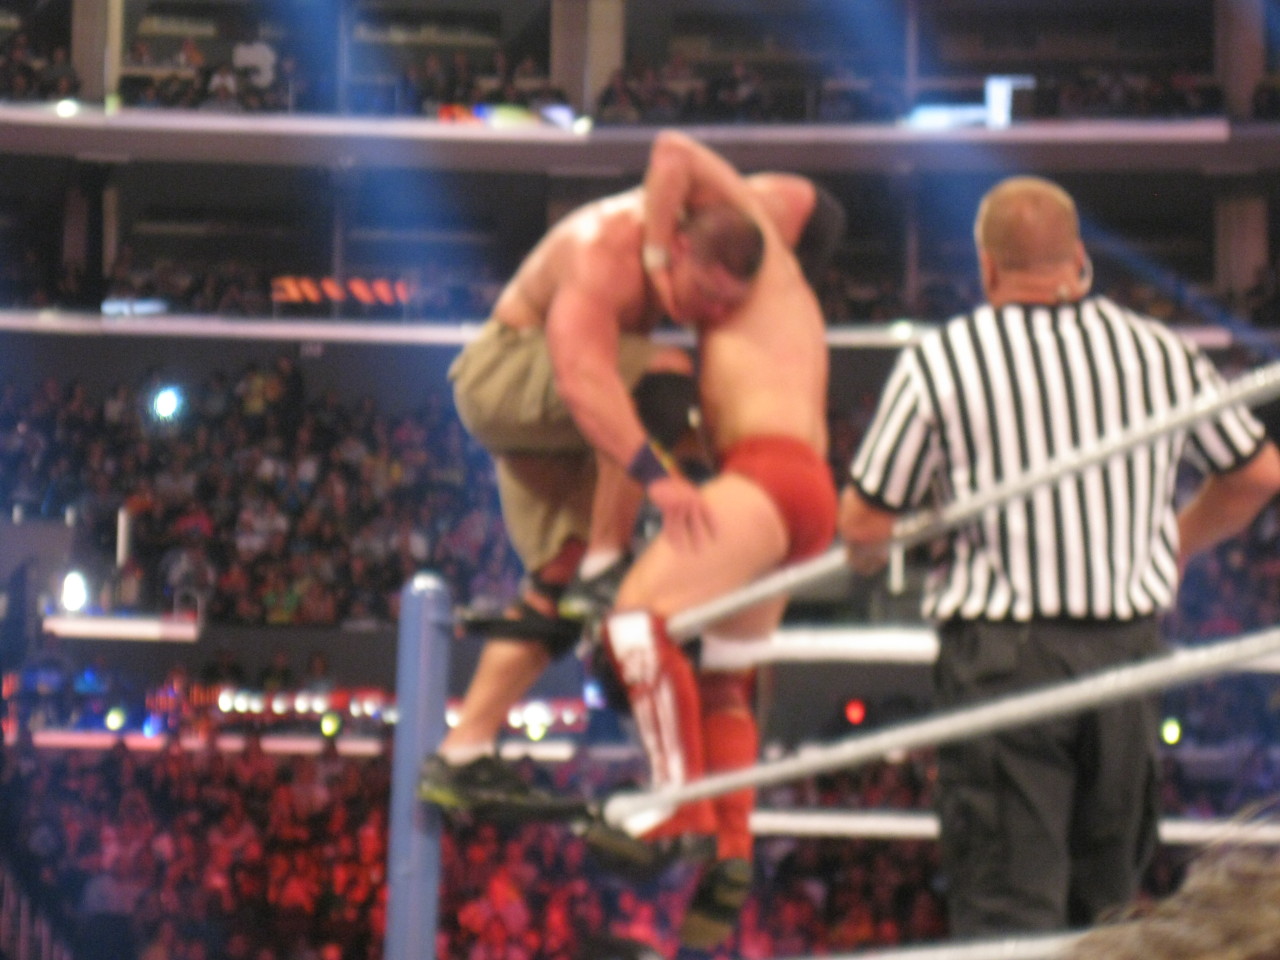 serenitywinchester:  John Cena vs. Daniel Bryan for the WWE championship at Summerslam